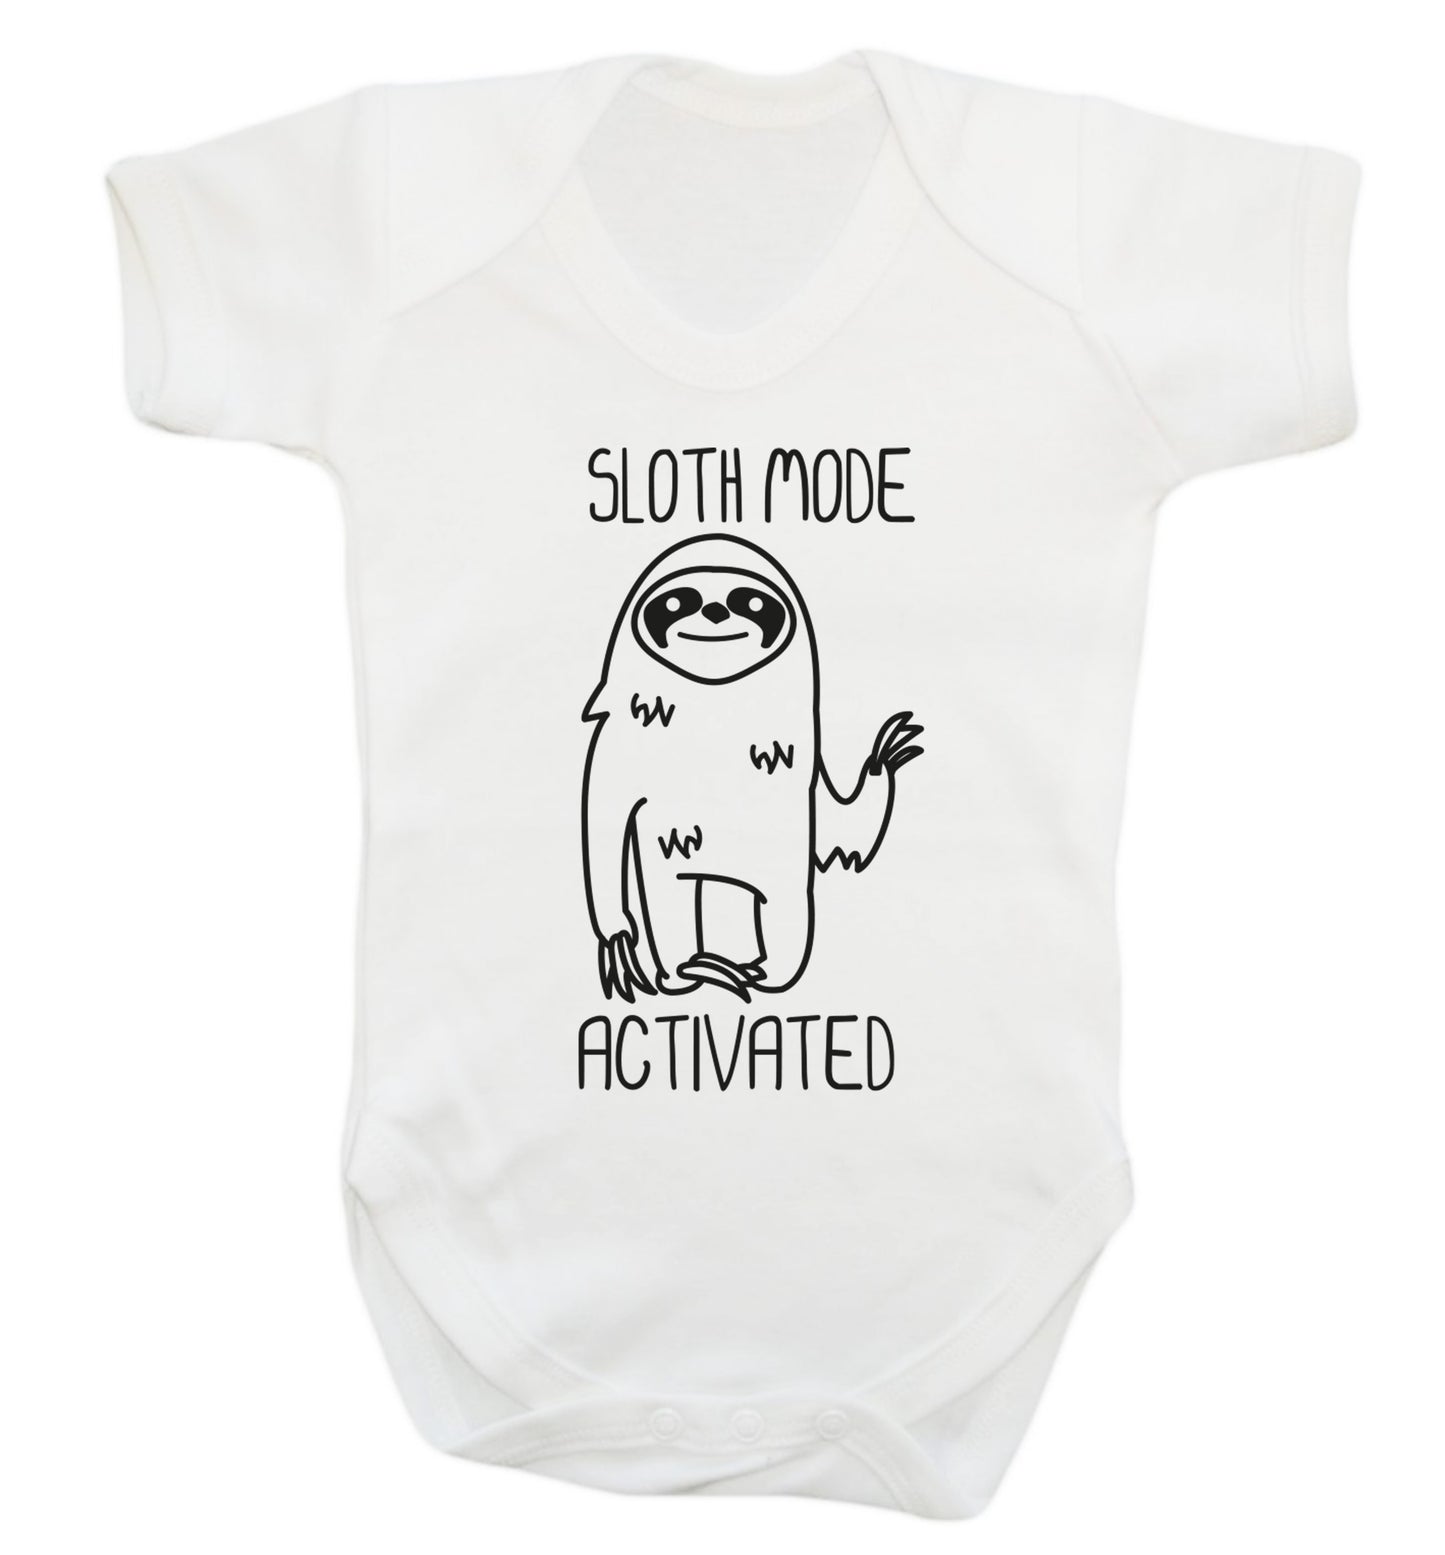 Sloth mode acitvated Baby Vest white 18-24 months